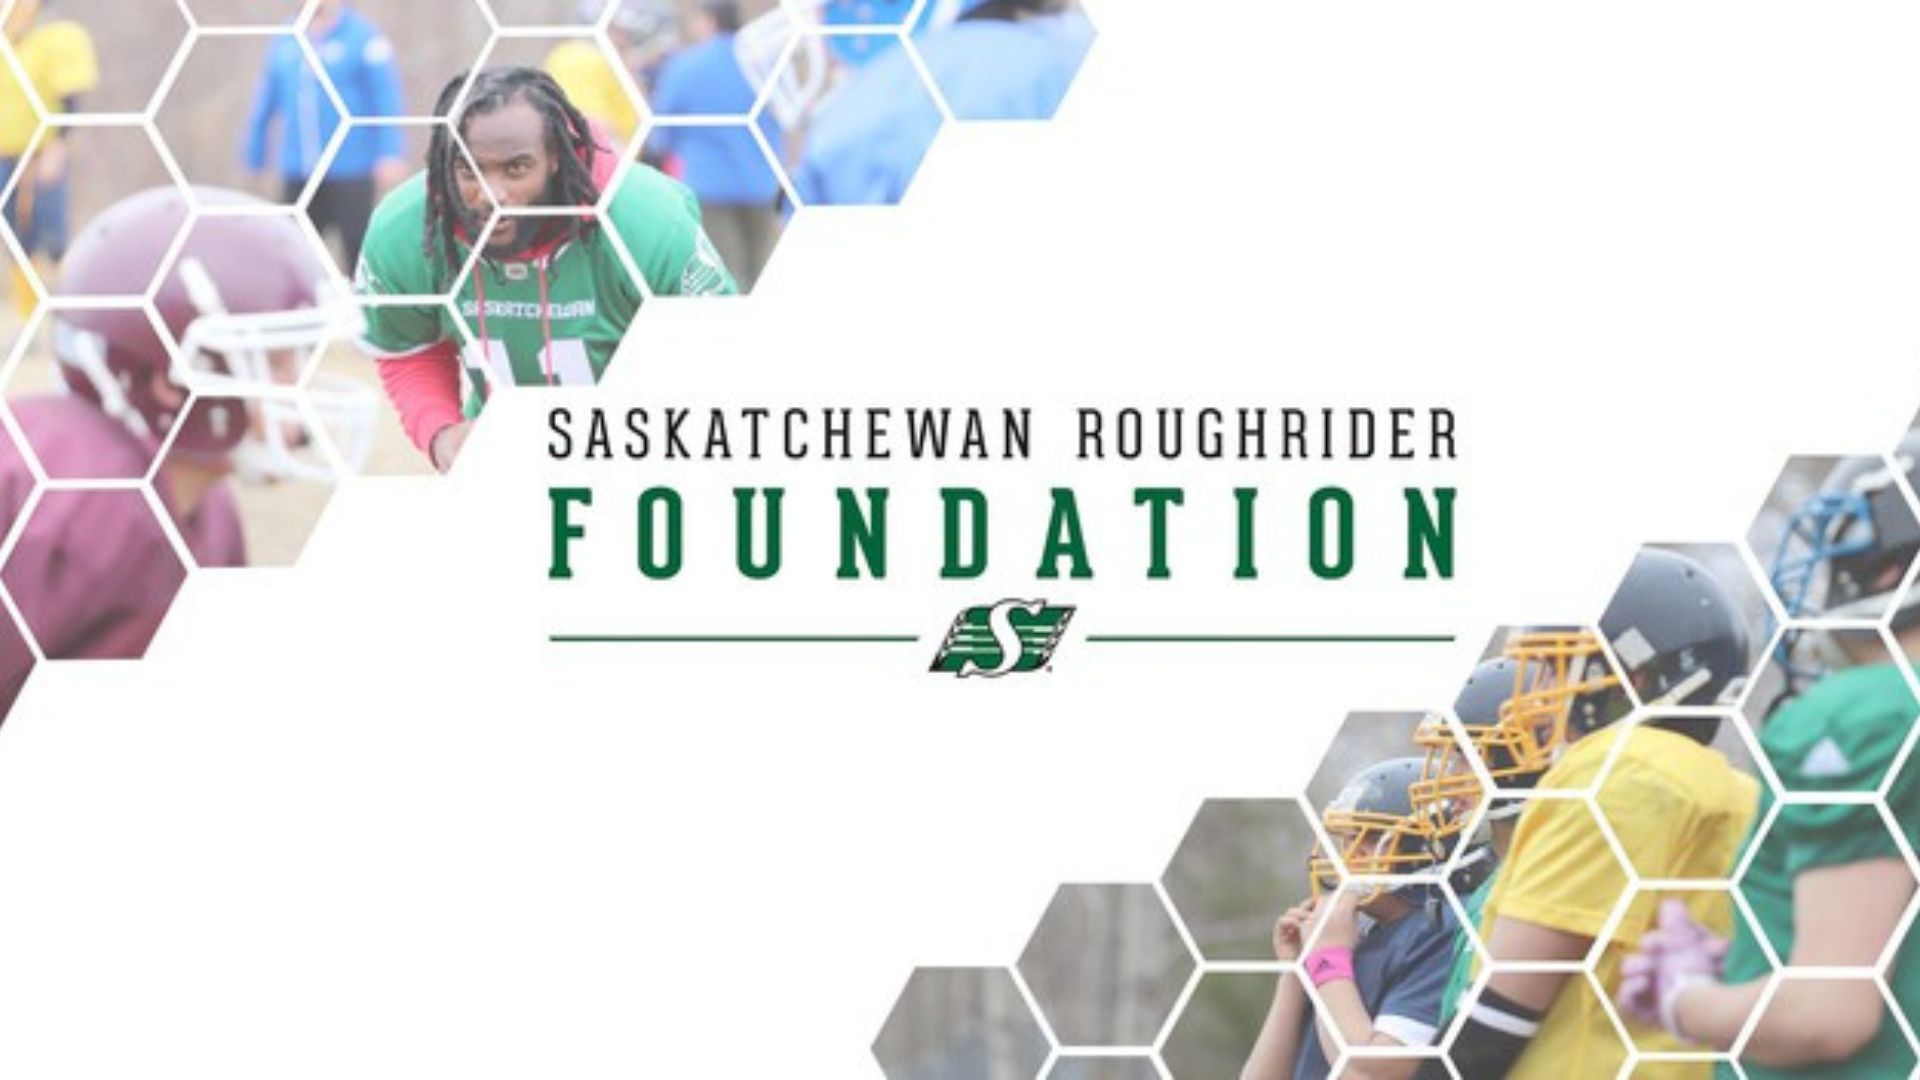 Saskatchewan Roughrider Foundation logo / Logo de la Fondation Roughrider de la Saskatchewan